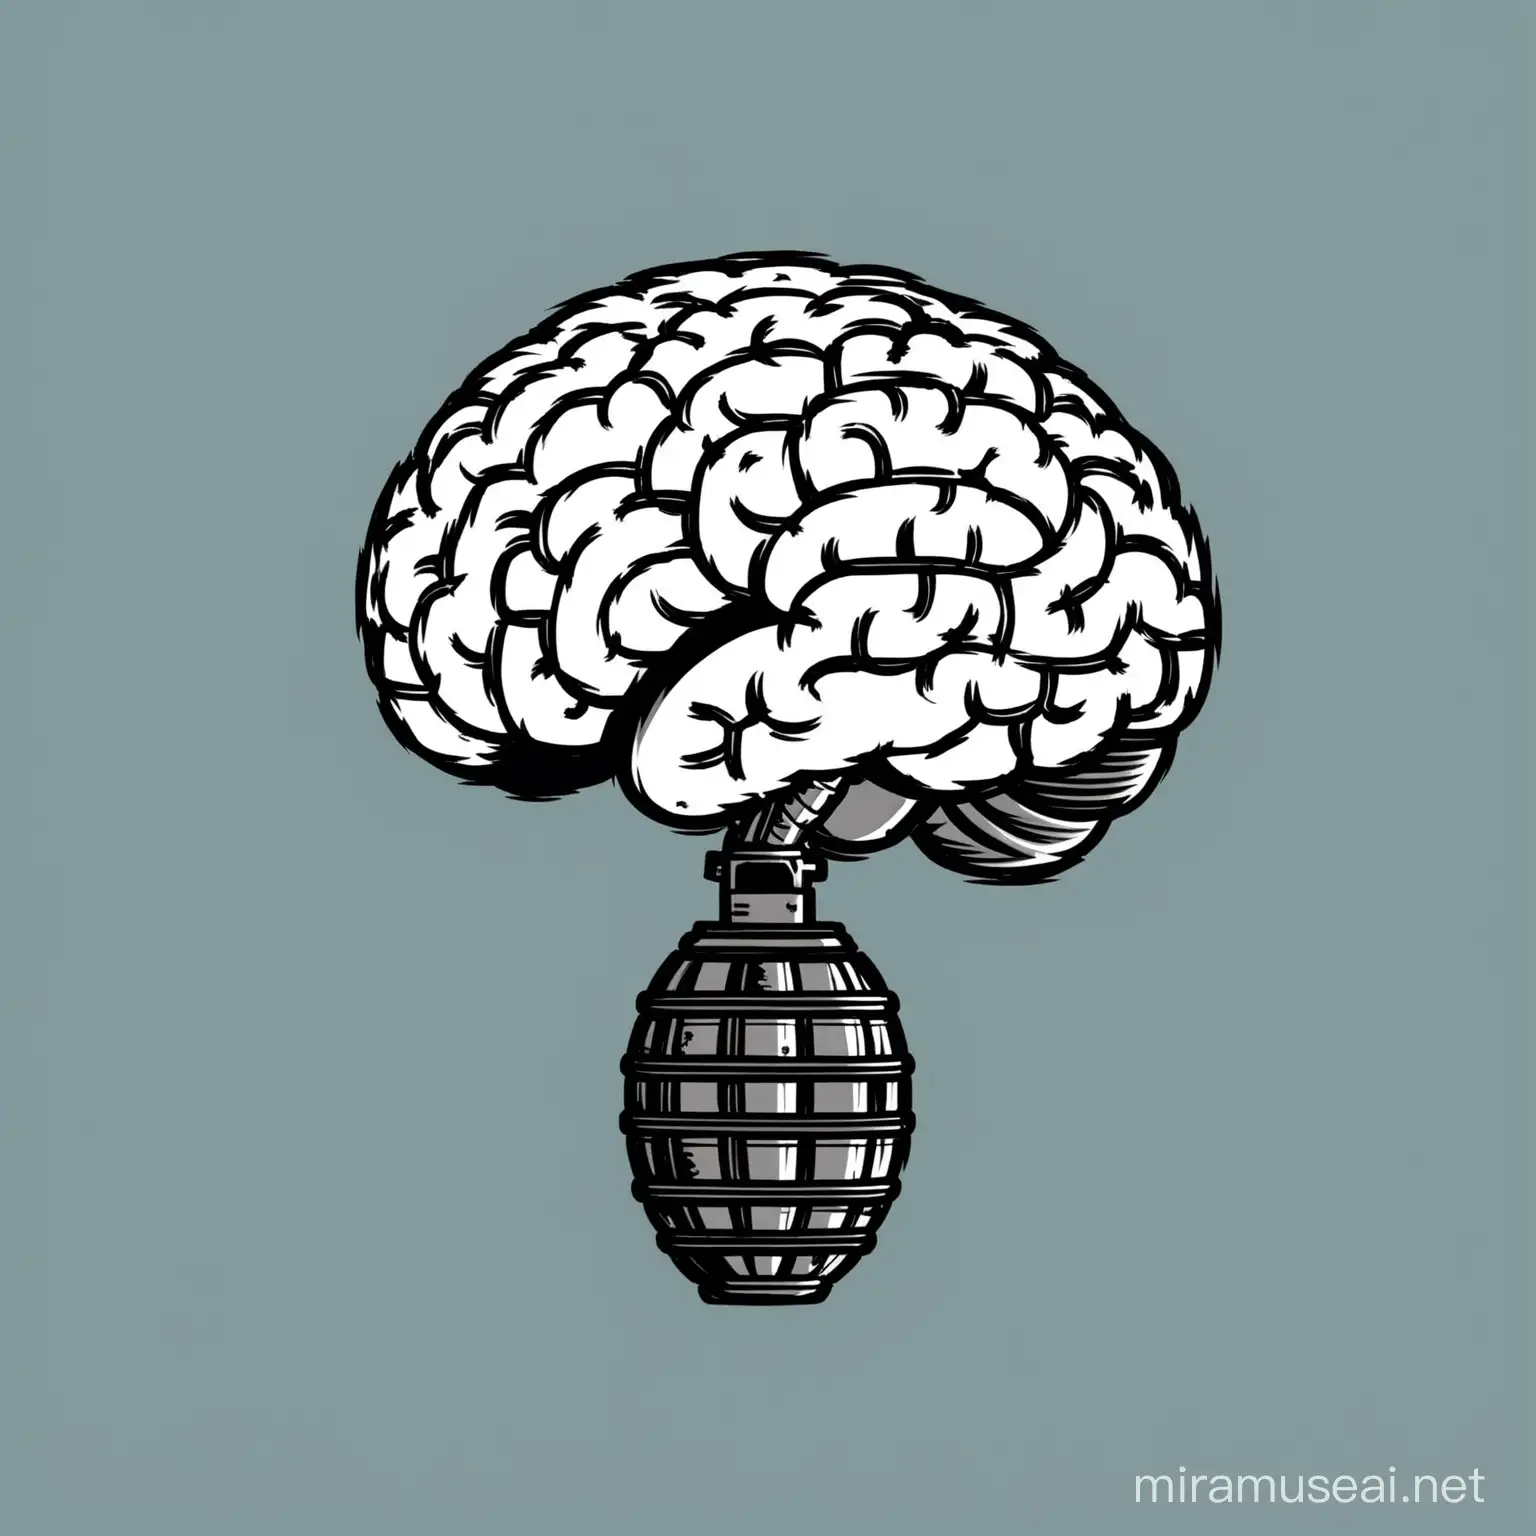 Minimalist Black and White Hand Grenade with Brain